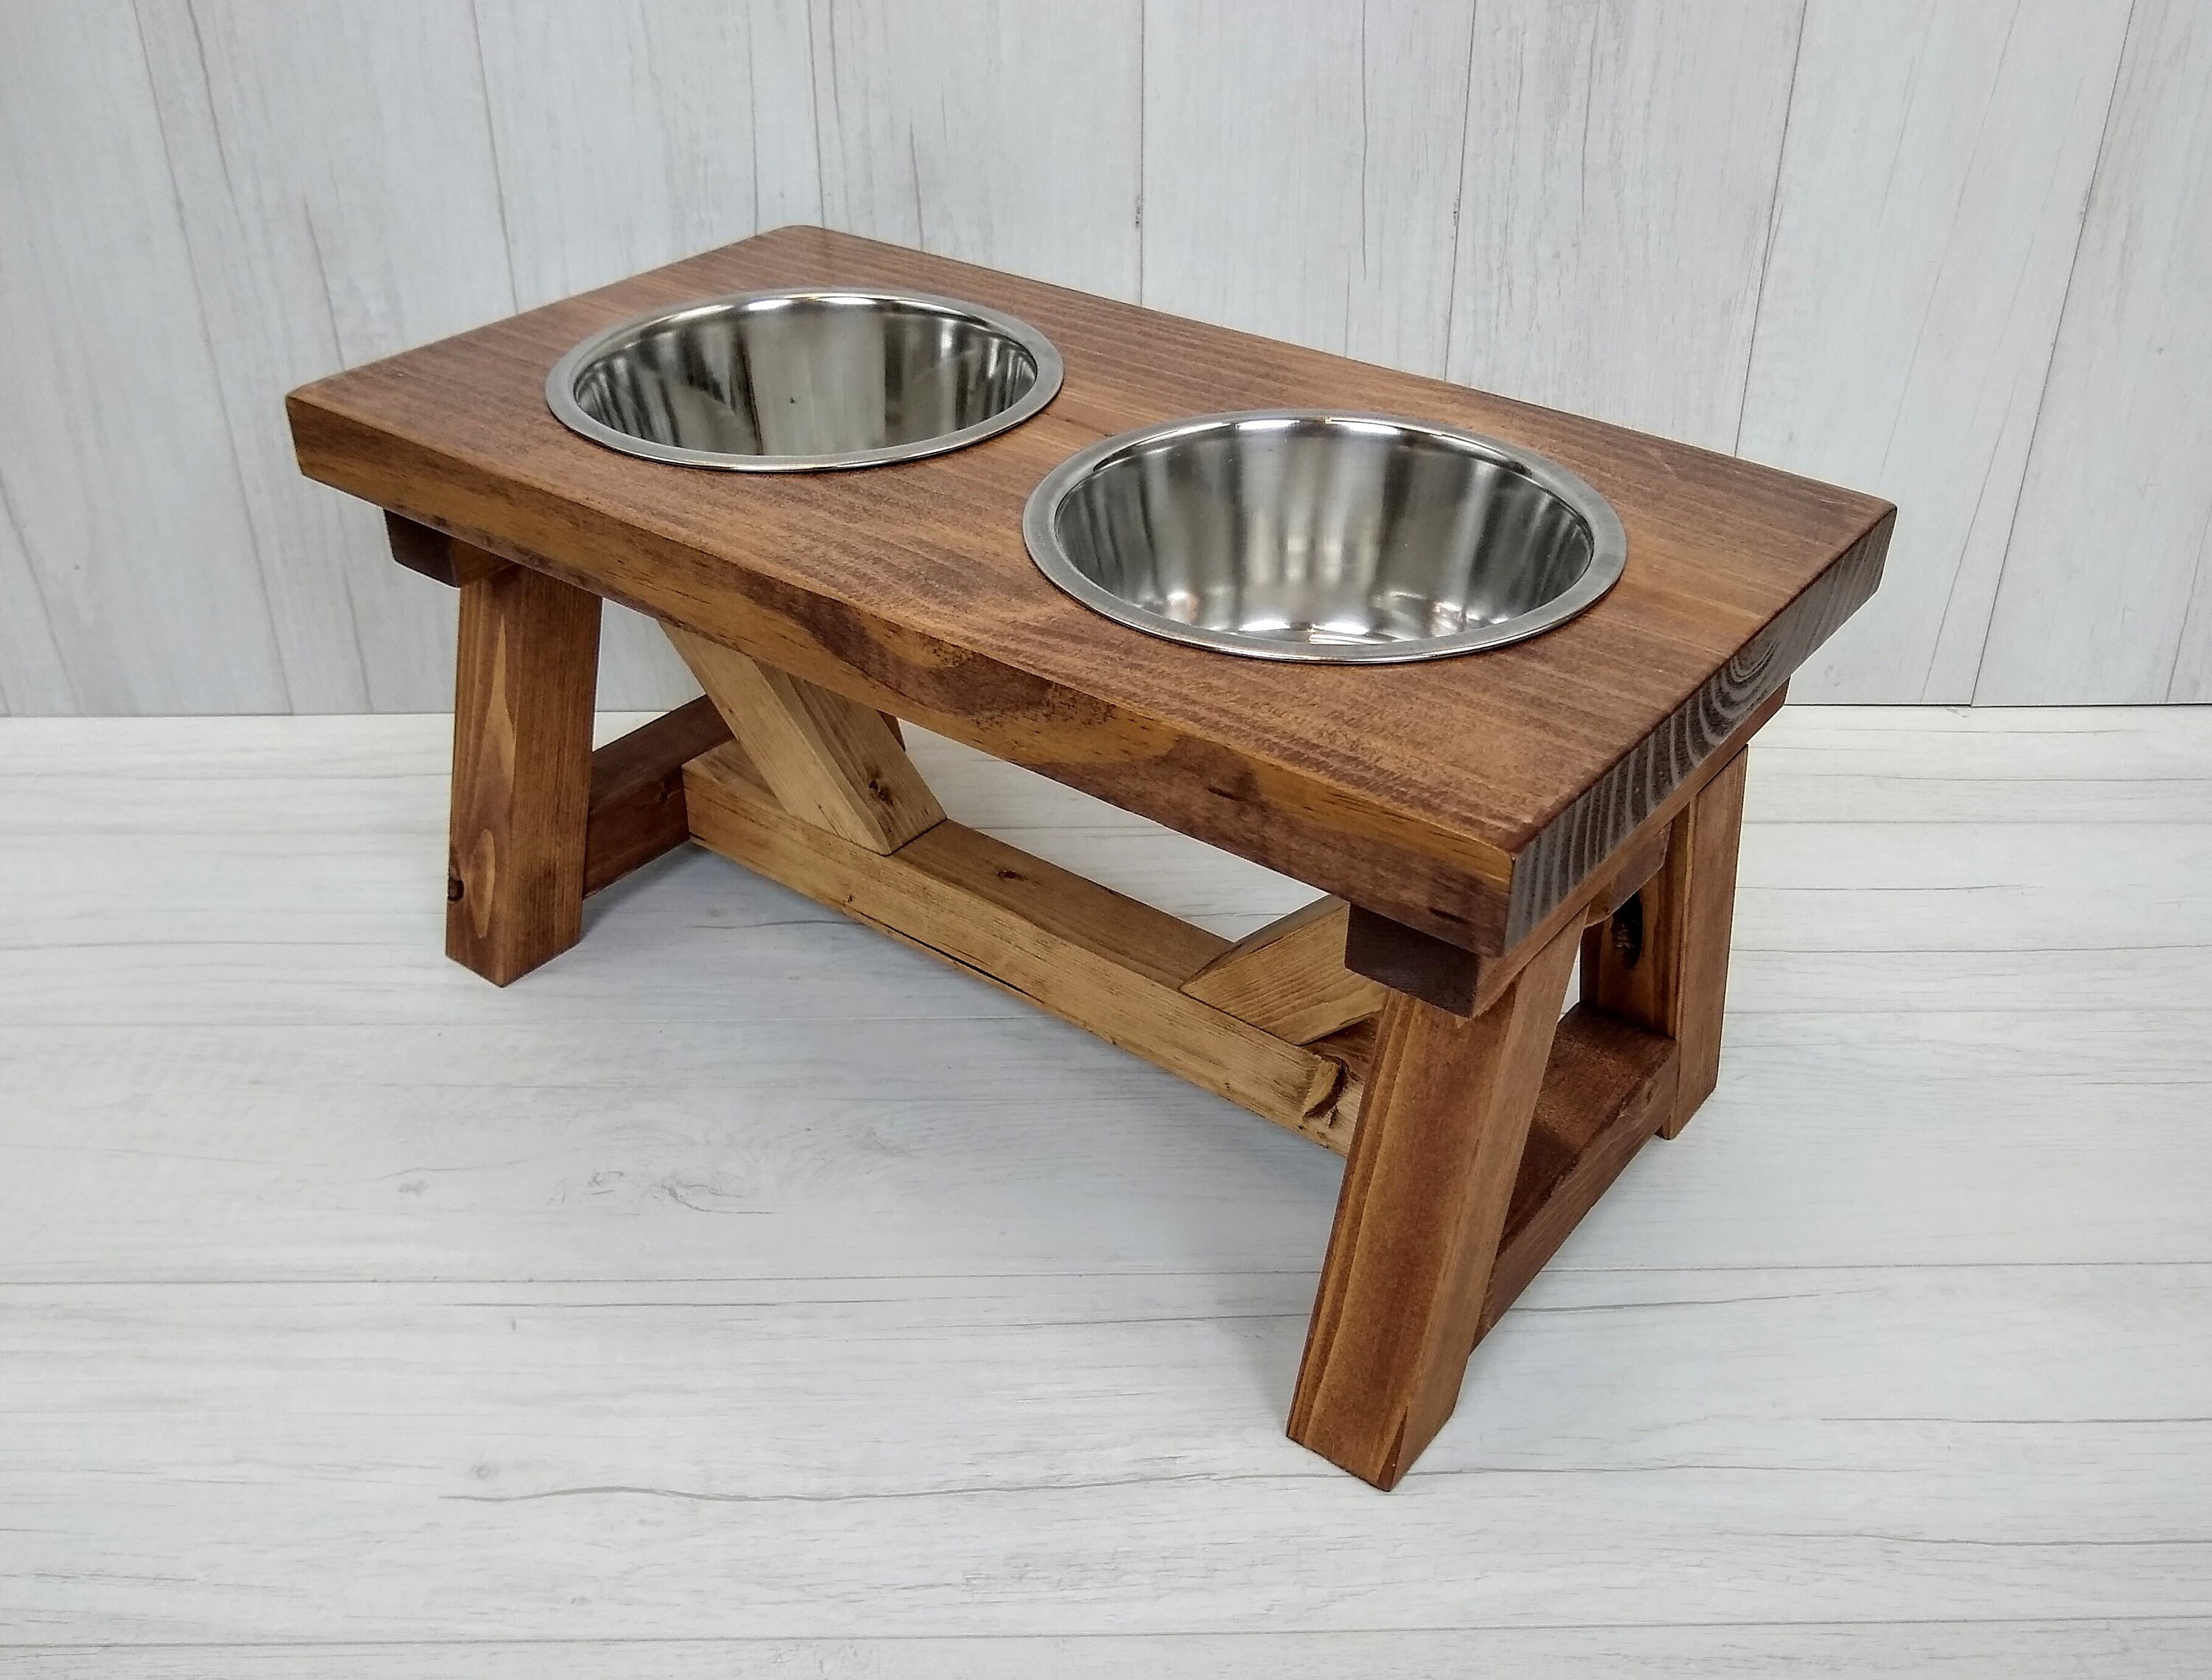 DIY Modern Elevated Dog Bowl Stand - Handmade Weekly